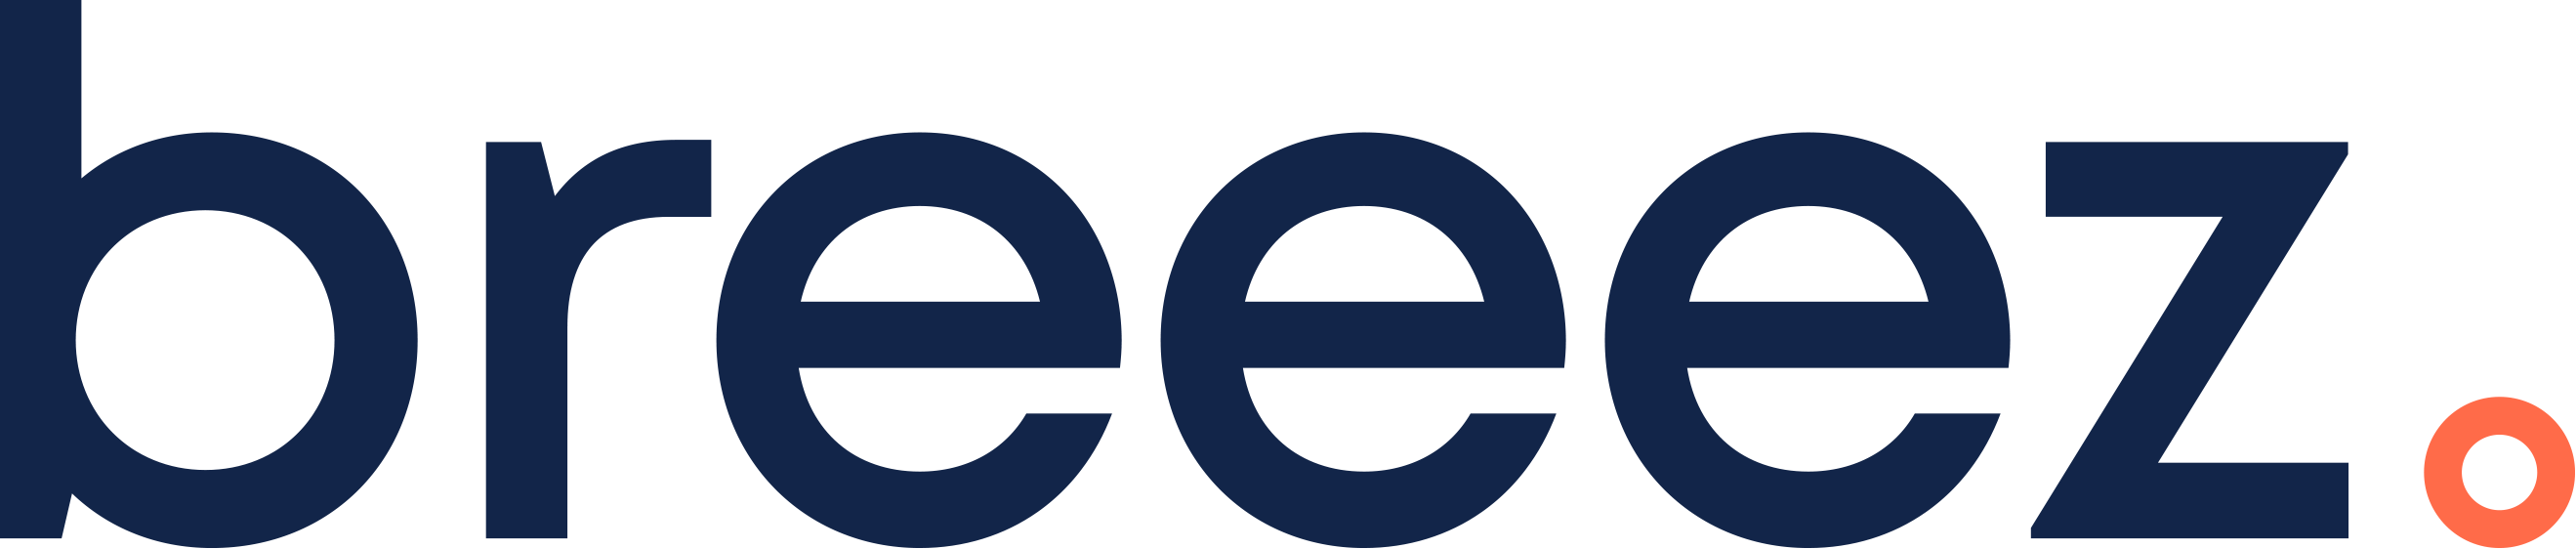 Breeez Logo